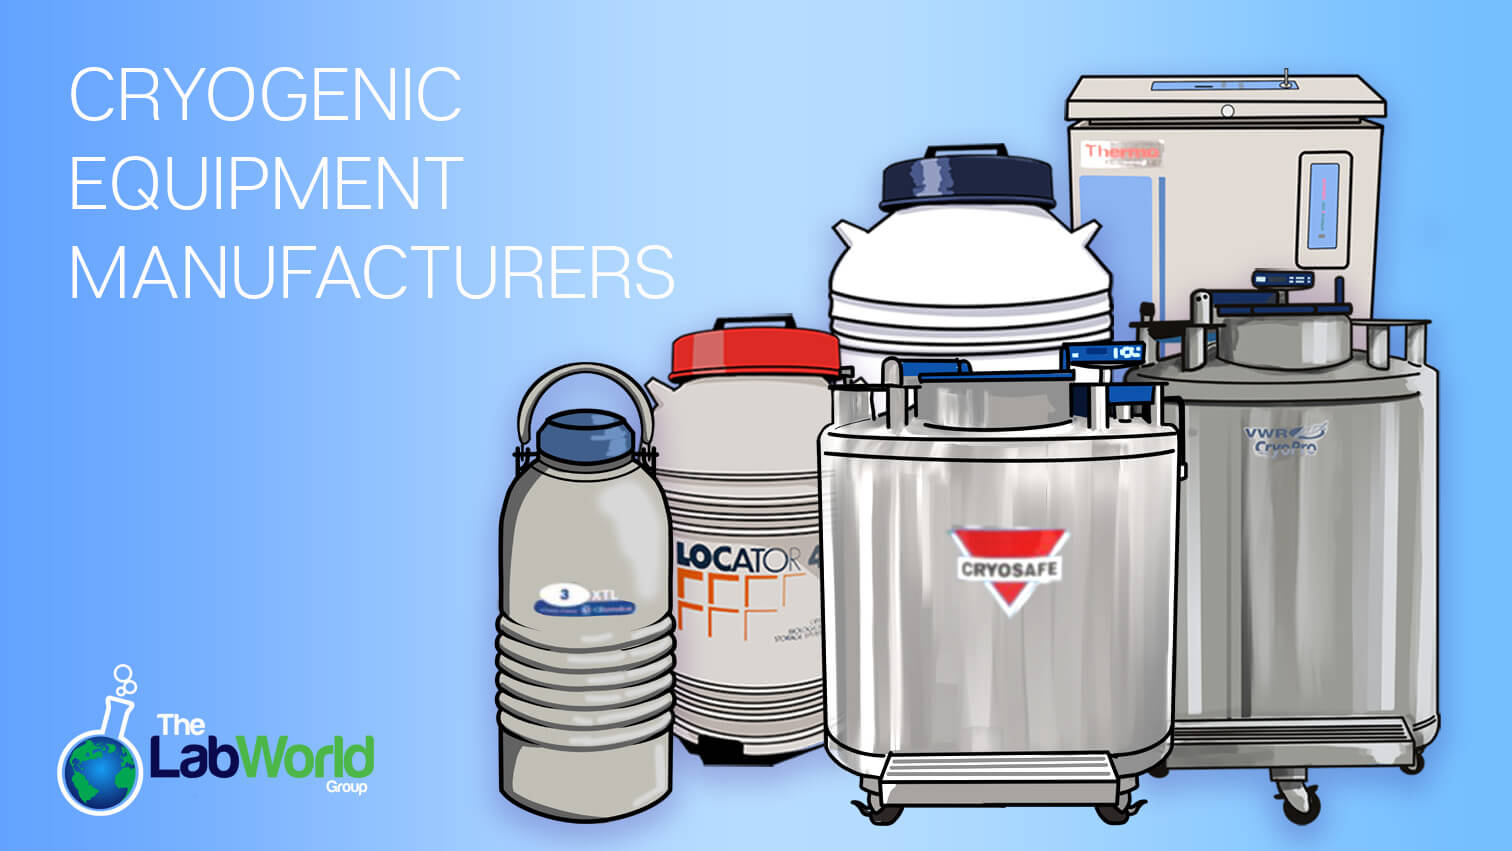 Cryogenic equipment manufacturers